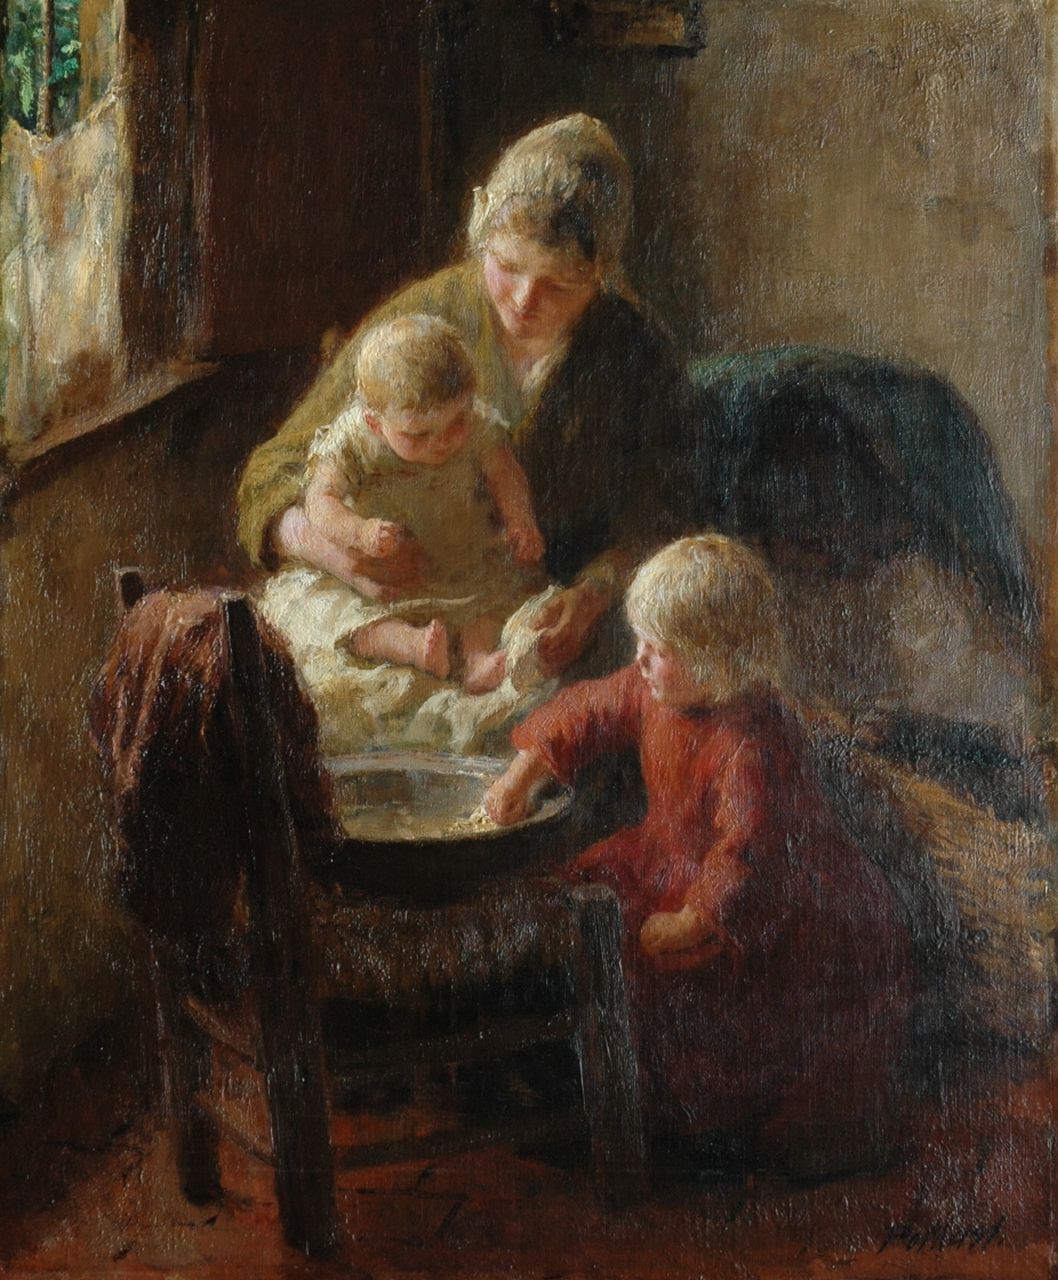 Pothast B.J.C.  | 'Bernard' Jean Corneille Pothast, Washing the baby together, oil on canvas 55.1 x 45.7 cm, signed l.r.